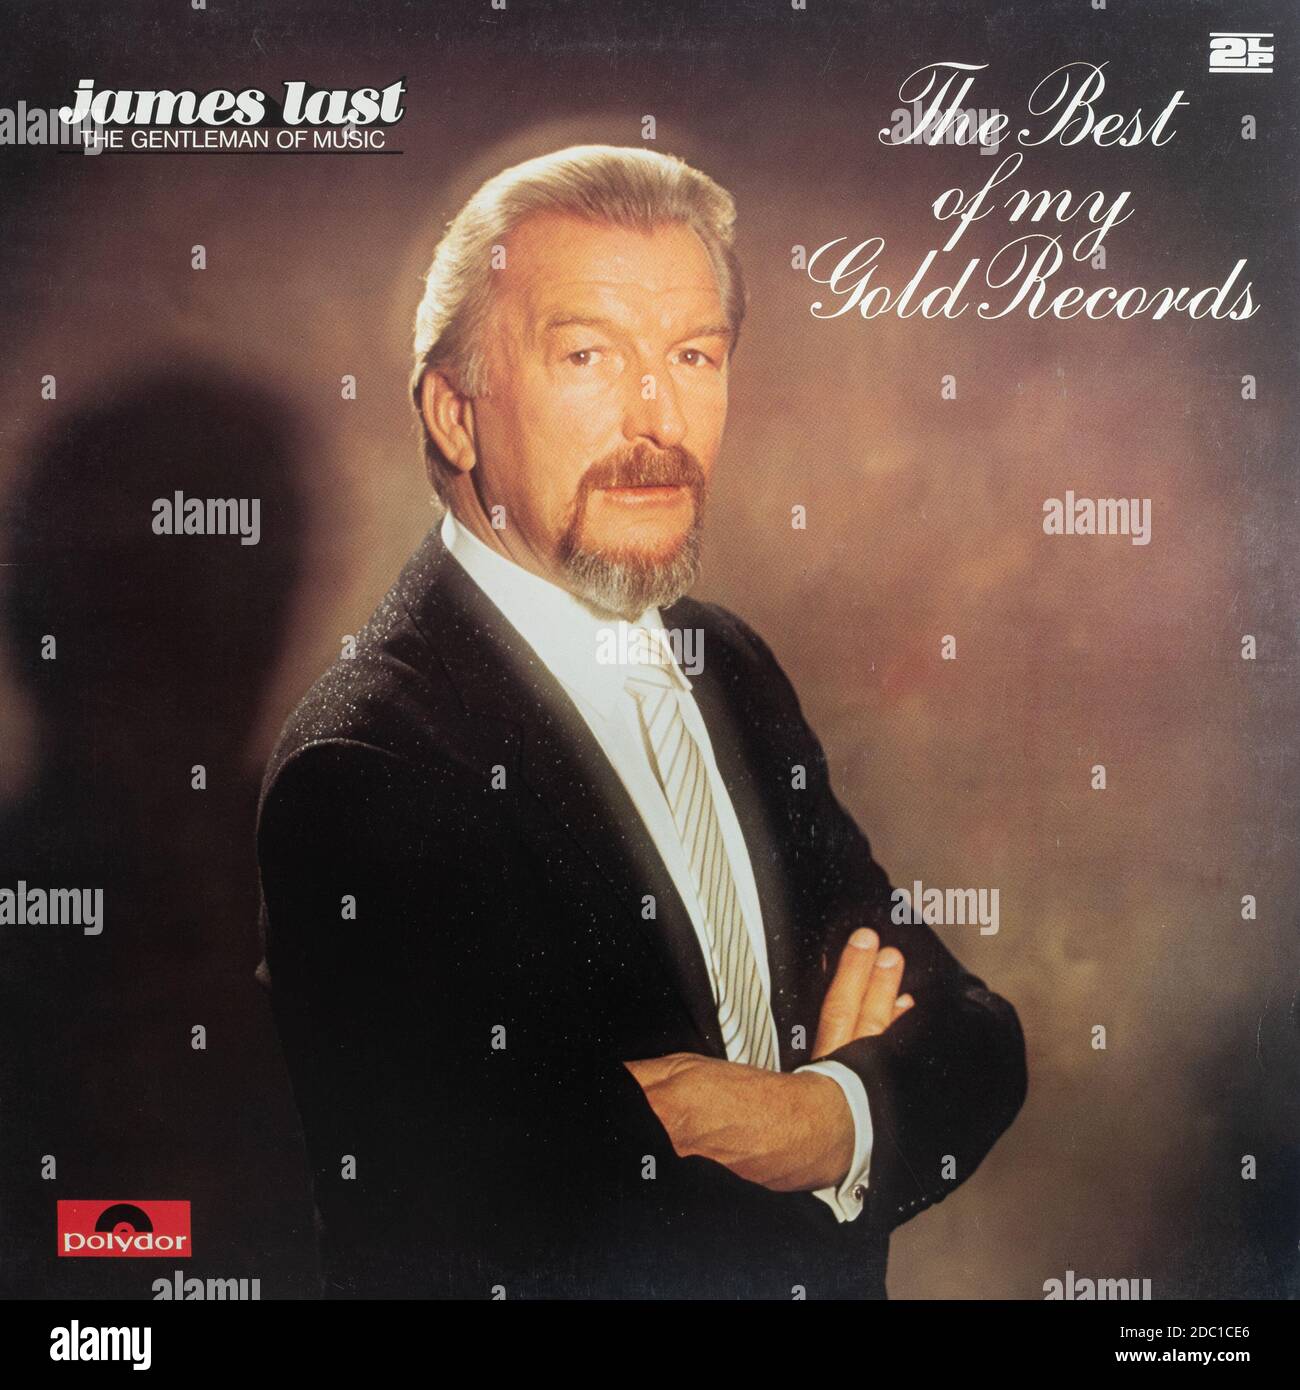 James Last vinyl LP record album cover, The Best of my Gold Records Stock Photo